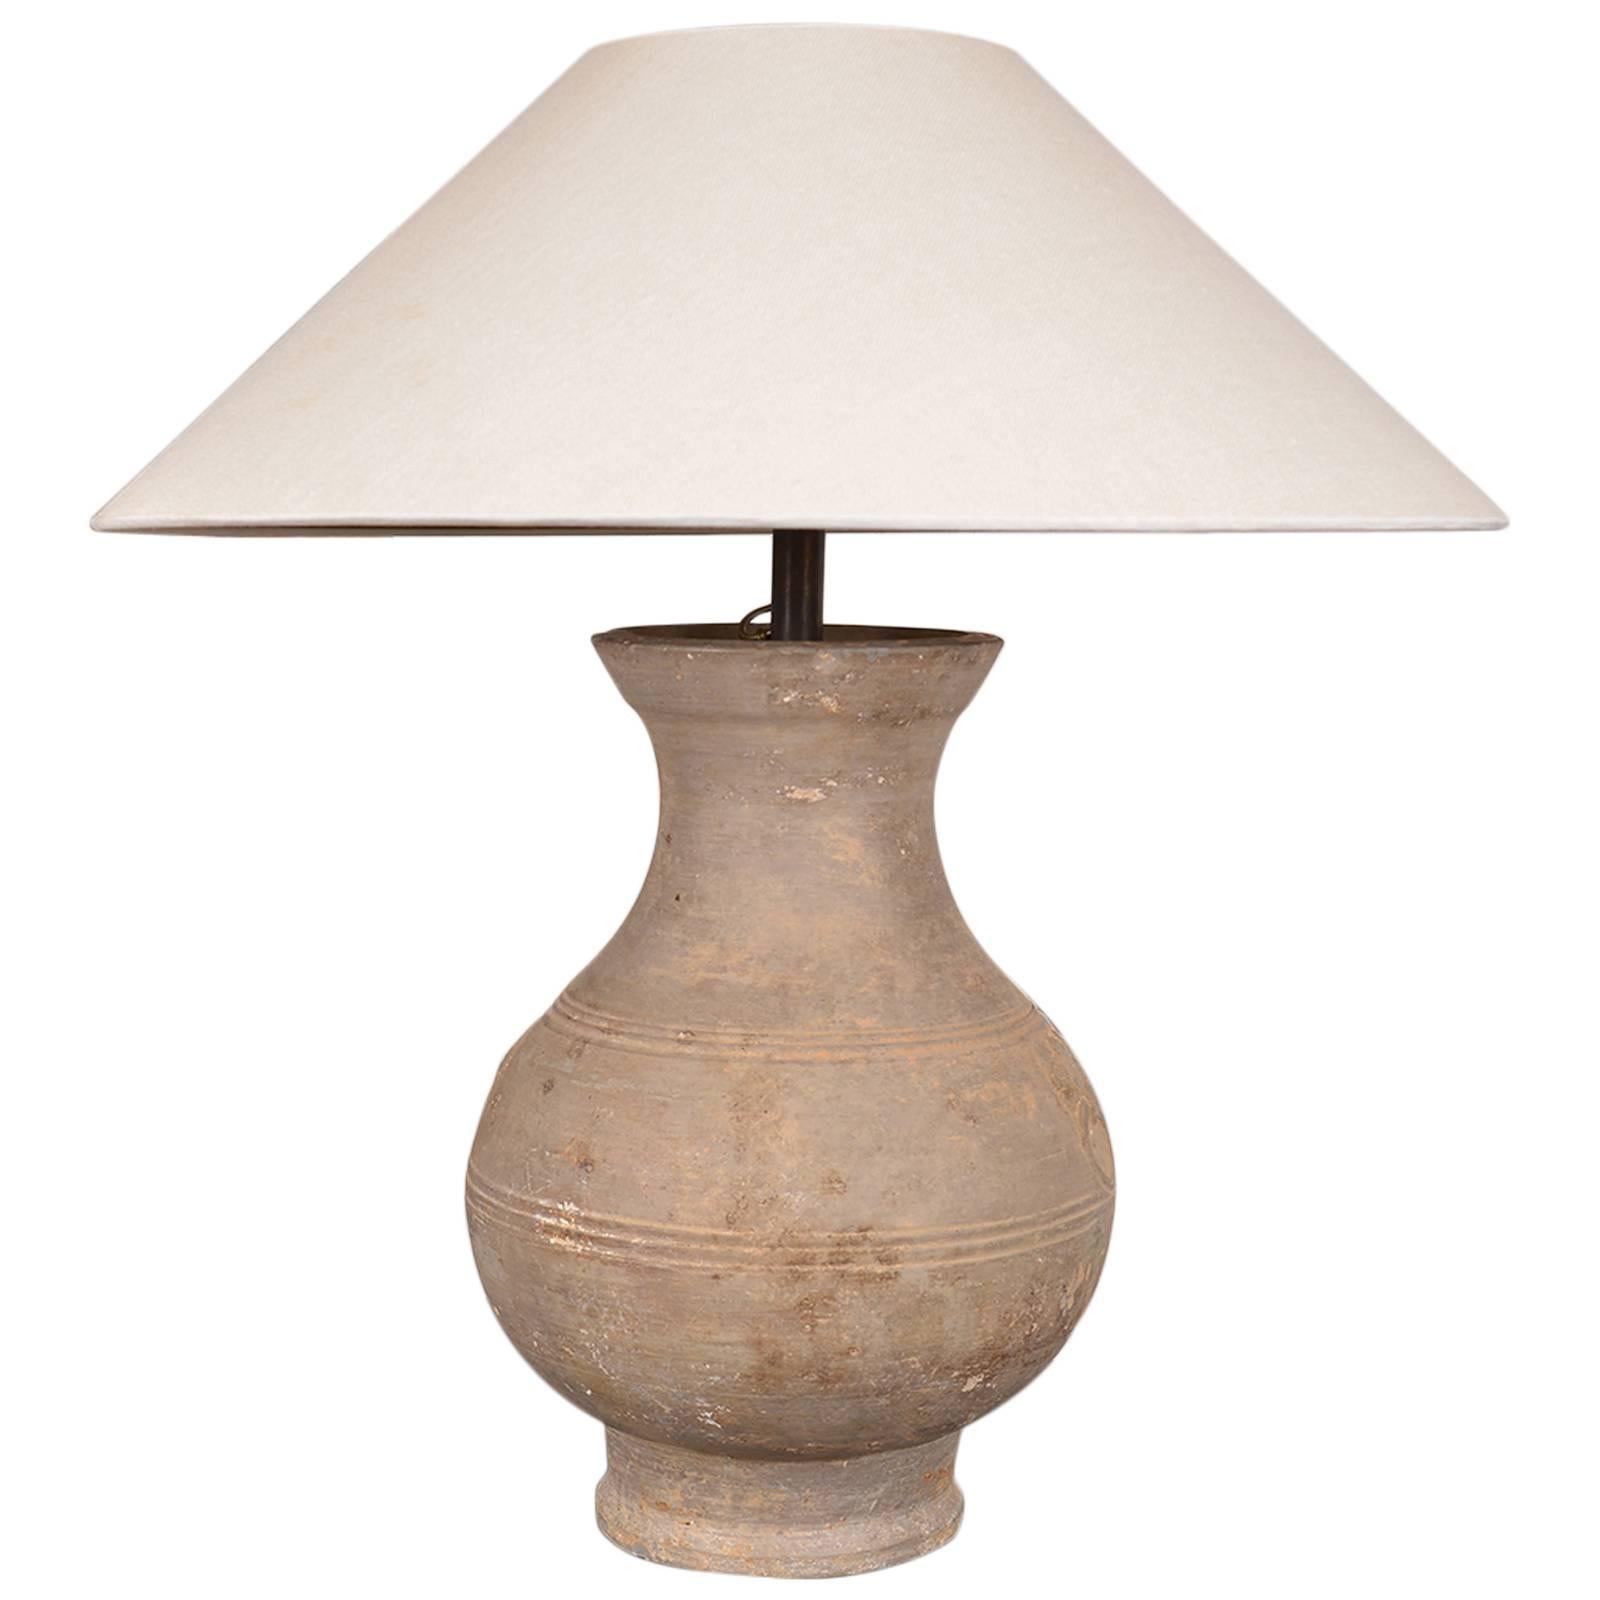 Chinese Han Dynasty Unglazed Vase Antique Table Lamp